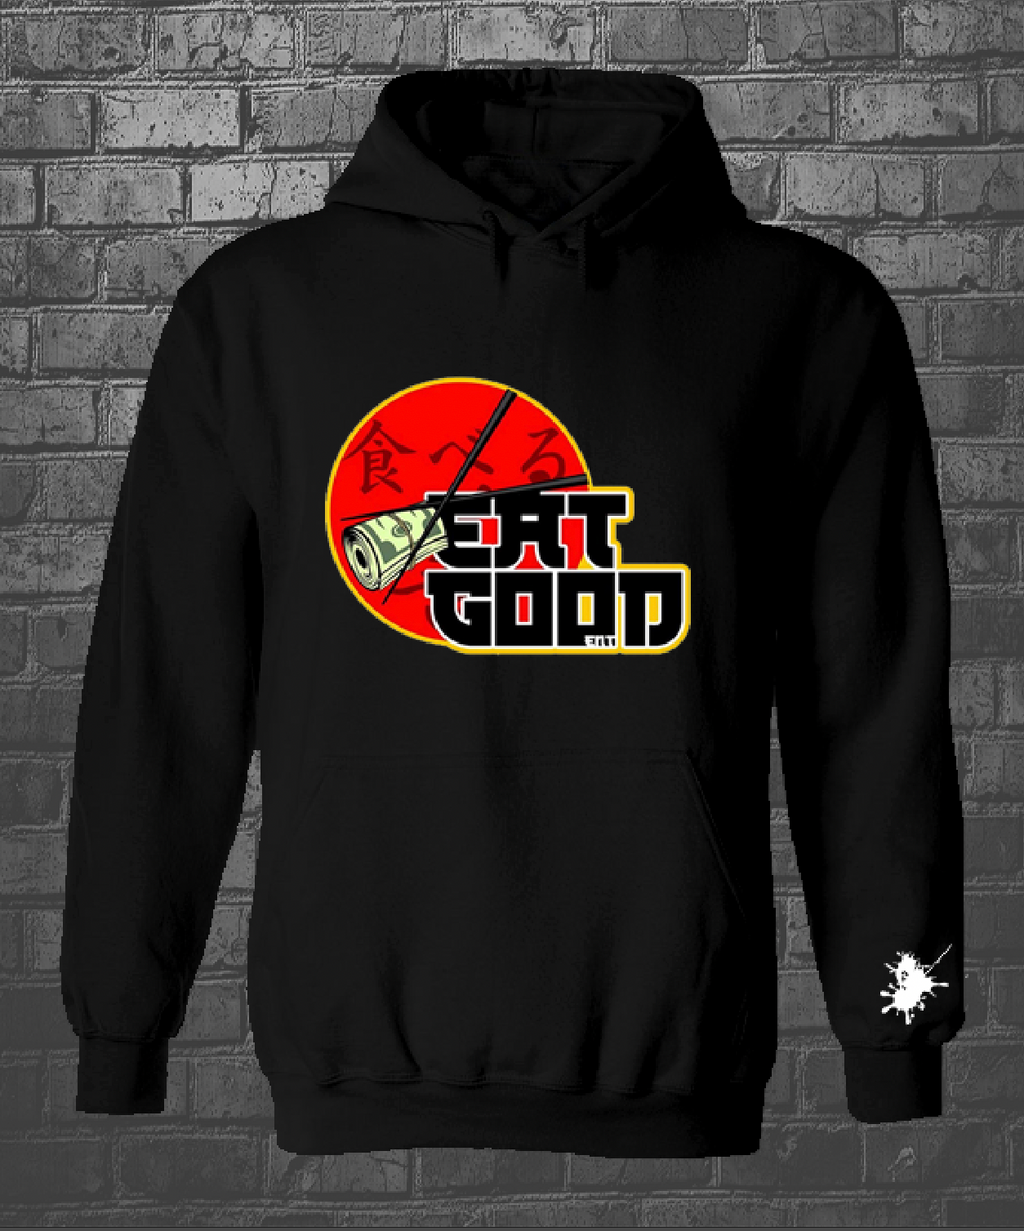 Eat Good Ent. Hoodie with big logo